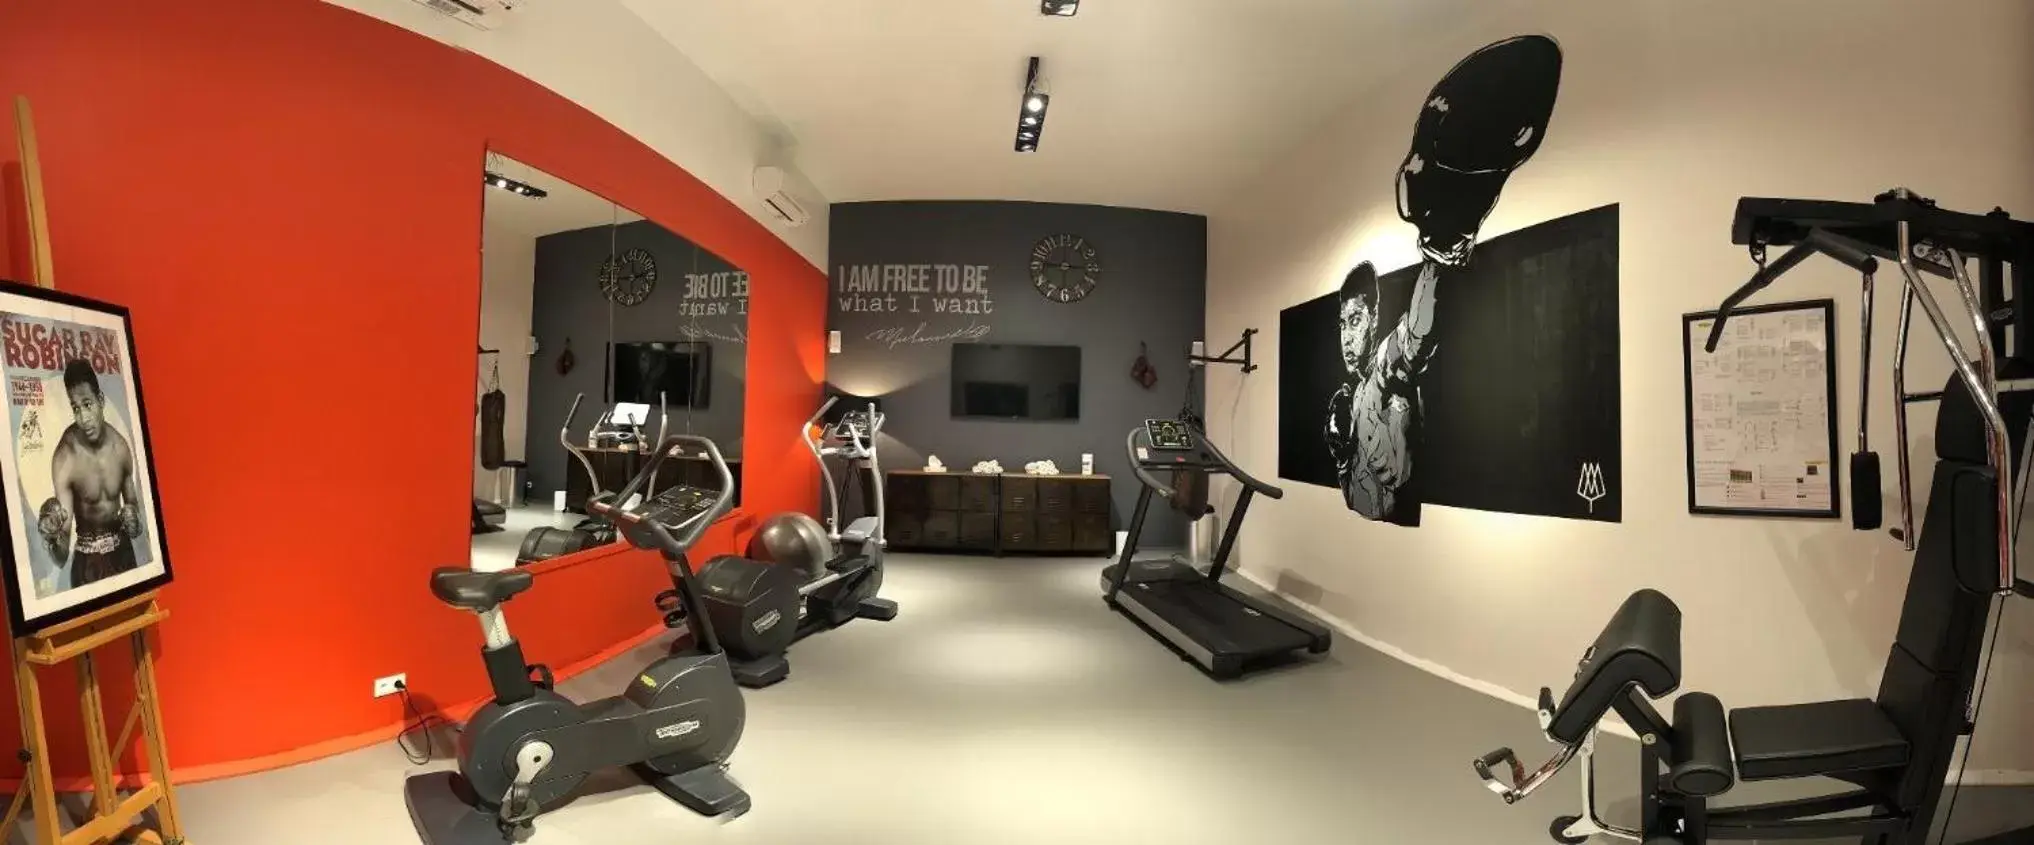 Fitness centre/facilities, Fitness Center/Facilities in Mercure Compiègne Sud